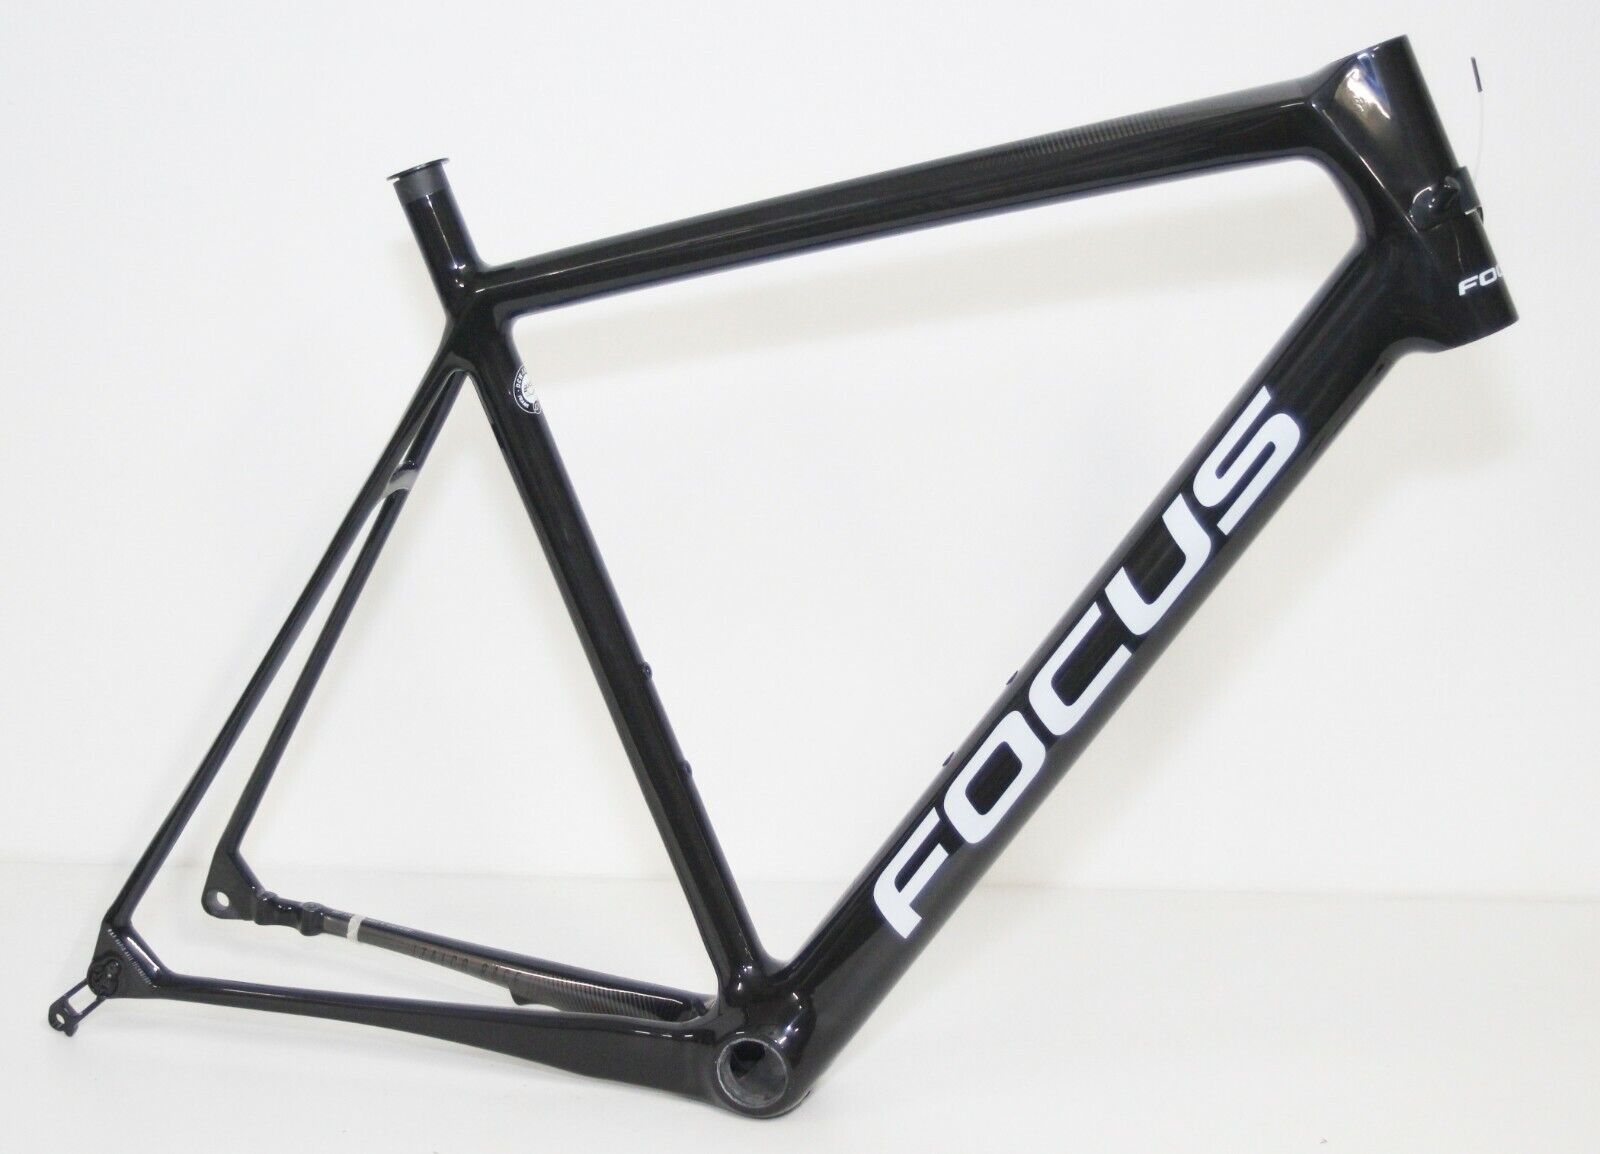 Focus Izalco Race 9.7 DISC Carbon Rennrad Rahmen black Größe L 57 cm NEU